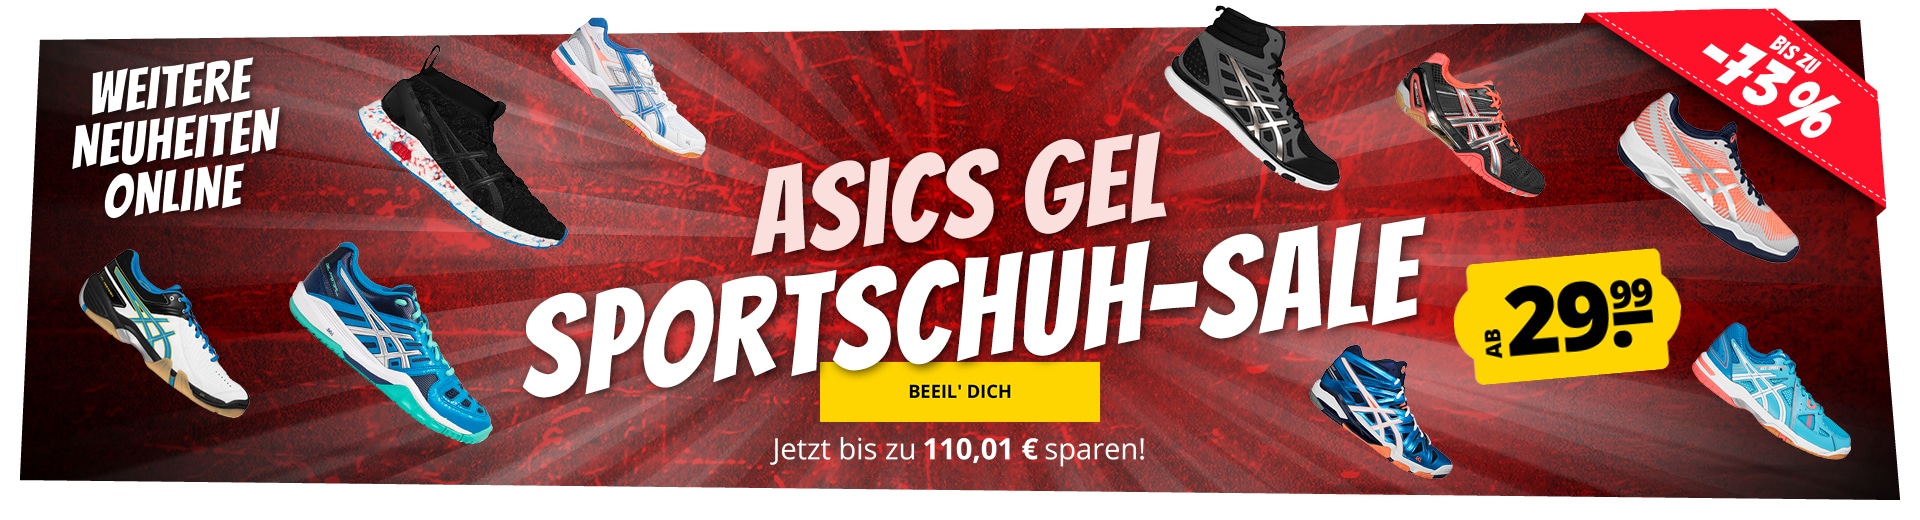 GEL Sportschuhe Sale DESK DEU